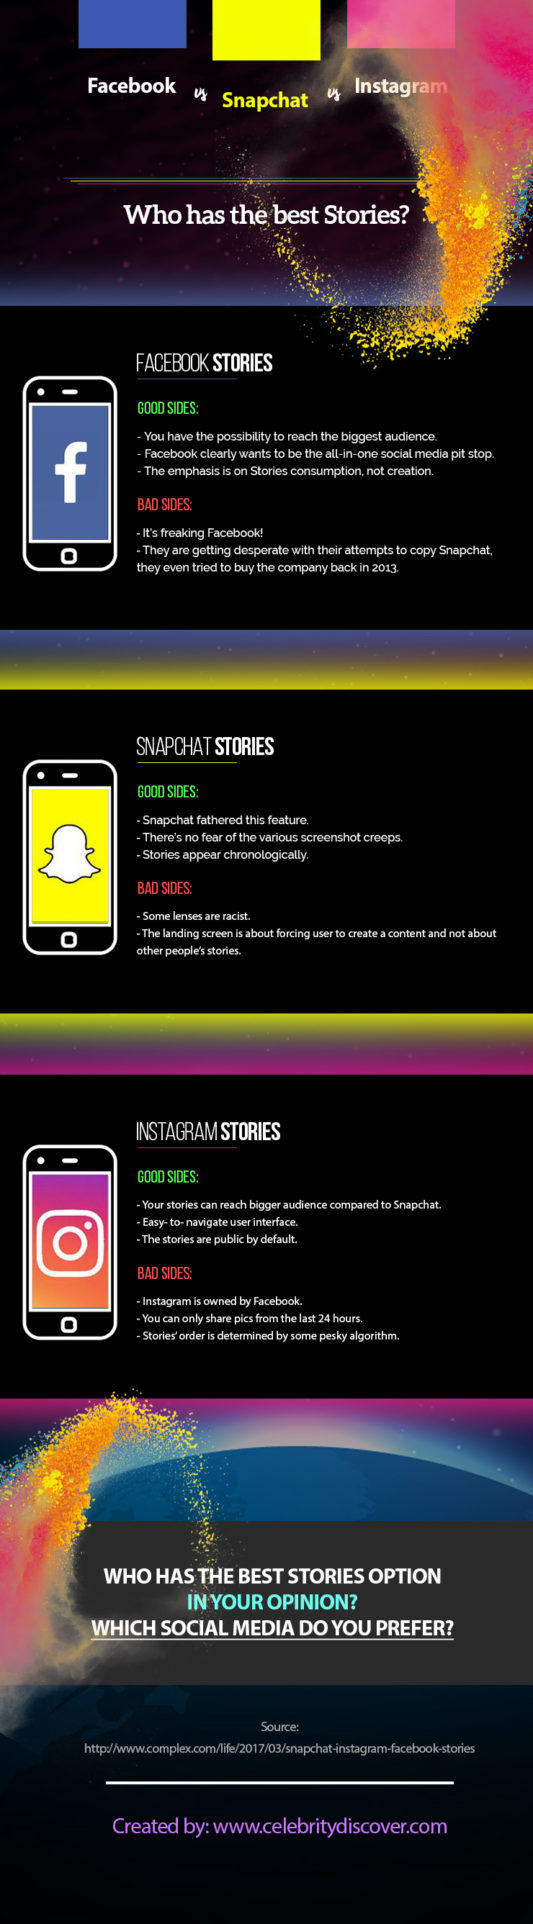 Facebook Vs Snapchat Vs Instagram: Who has the best Stories?